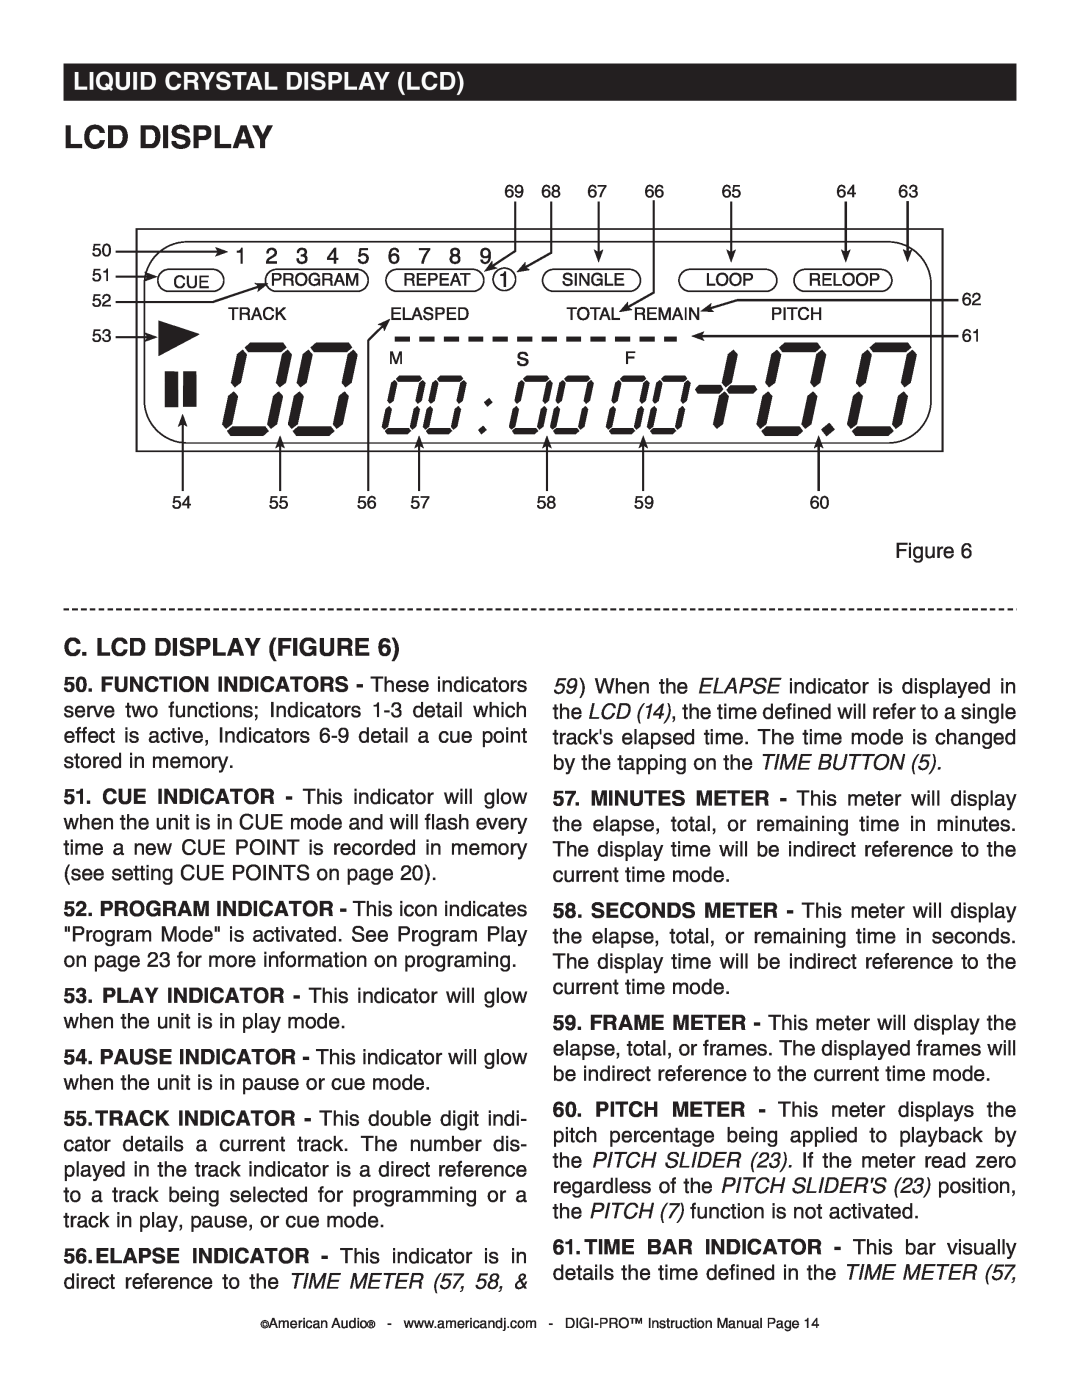 American Audio DIGI-PRO operating instructions Liquid Crystal Display Lcd, C. Lcd Display Figure 